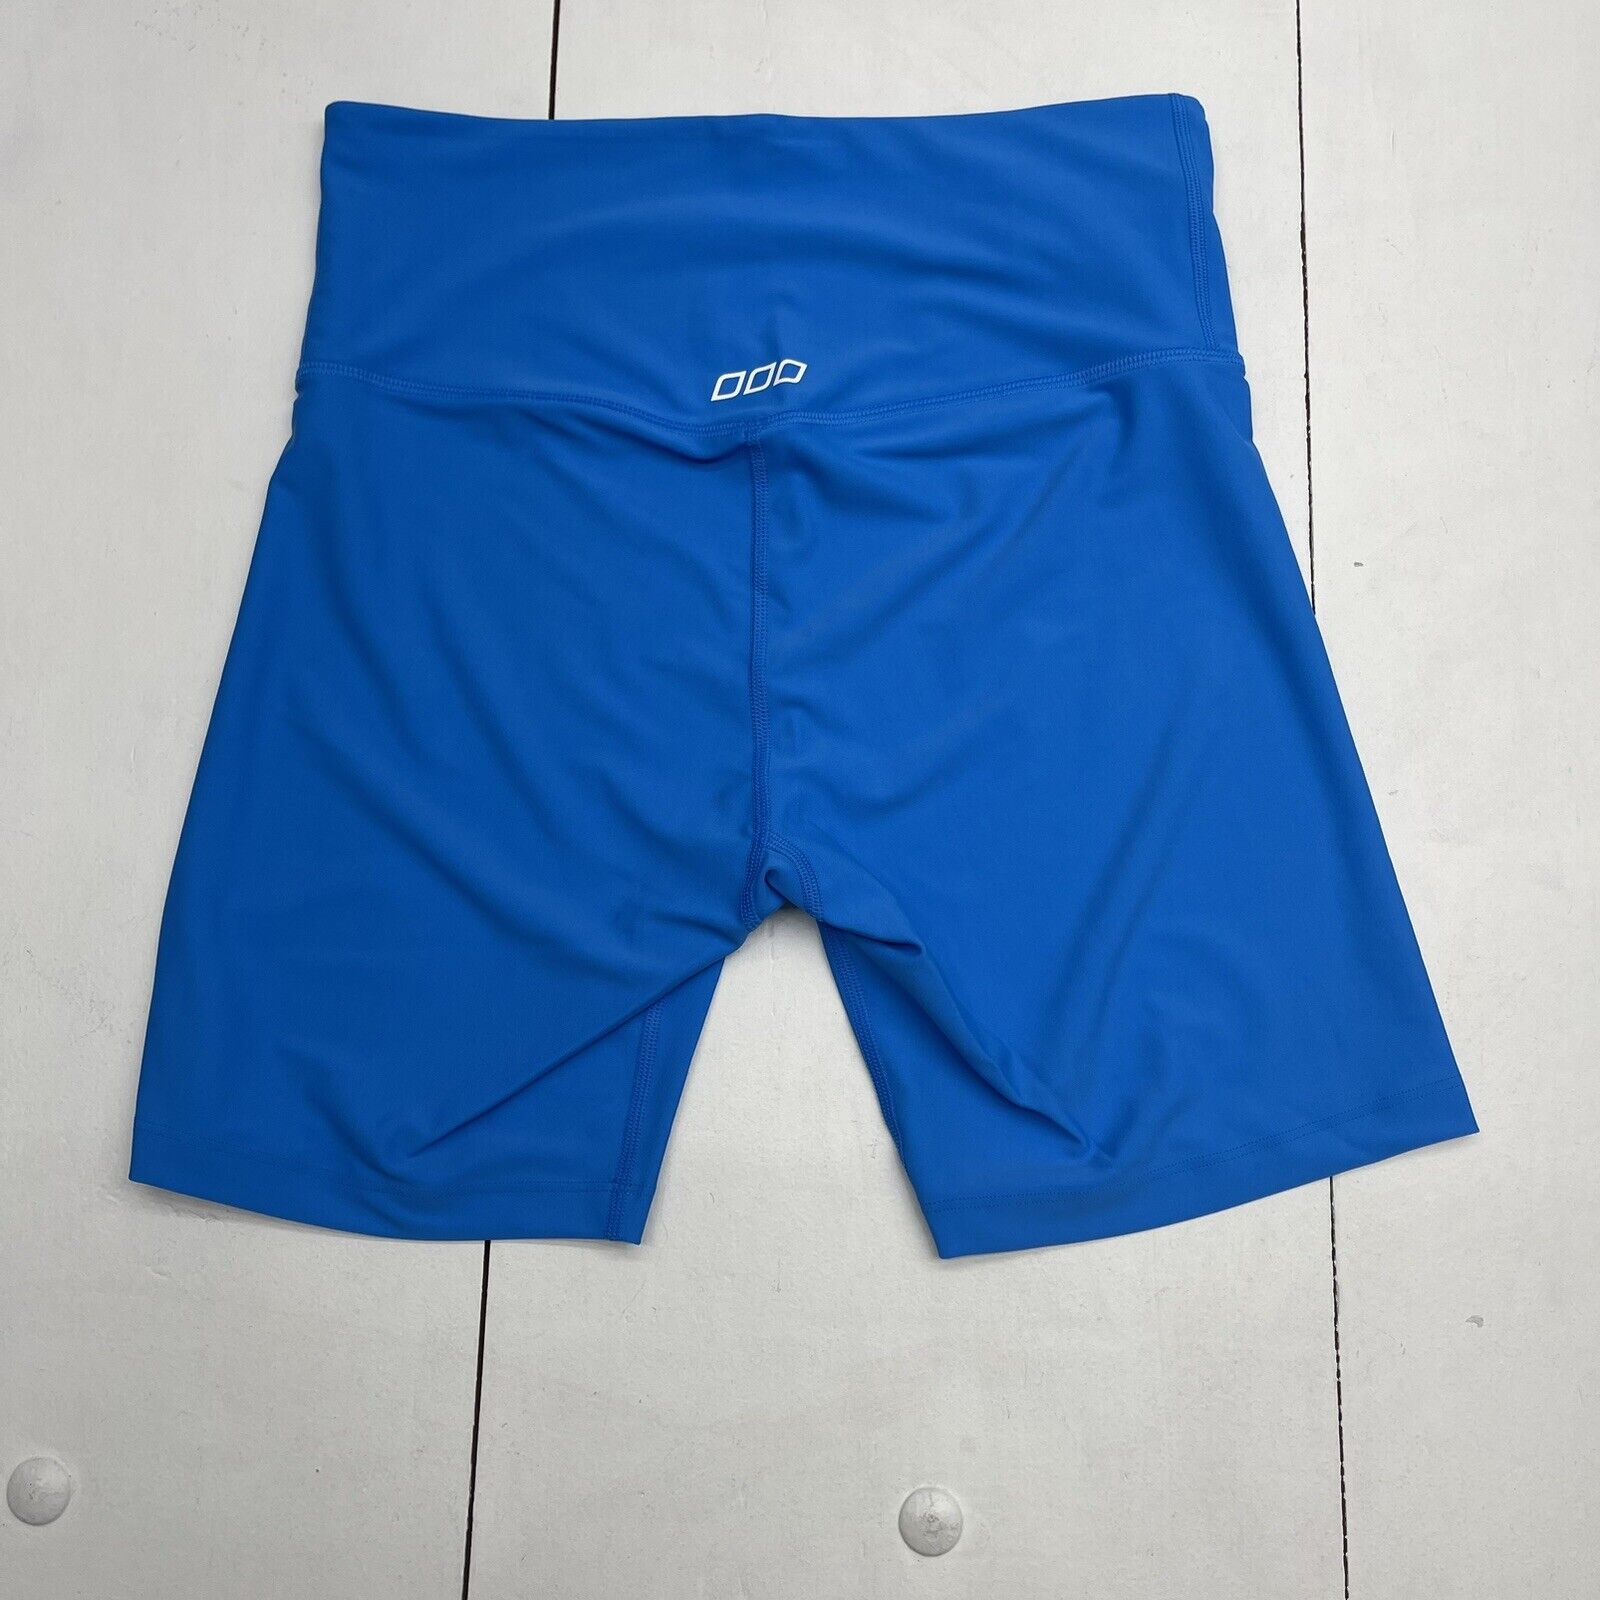 Lorna Jane Cool Touch Lotus Bike Shorts Capri Blue Women's Size